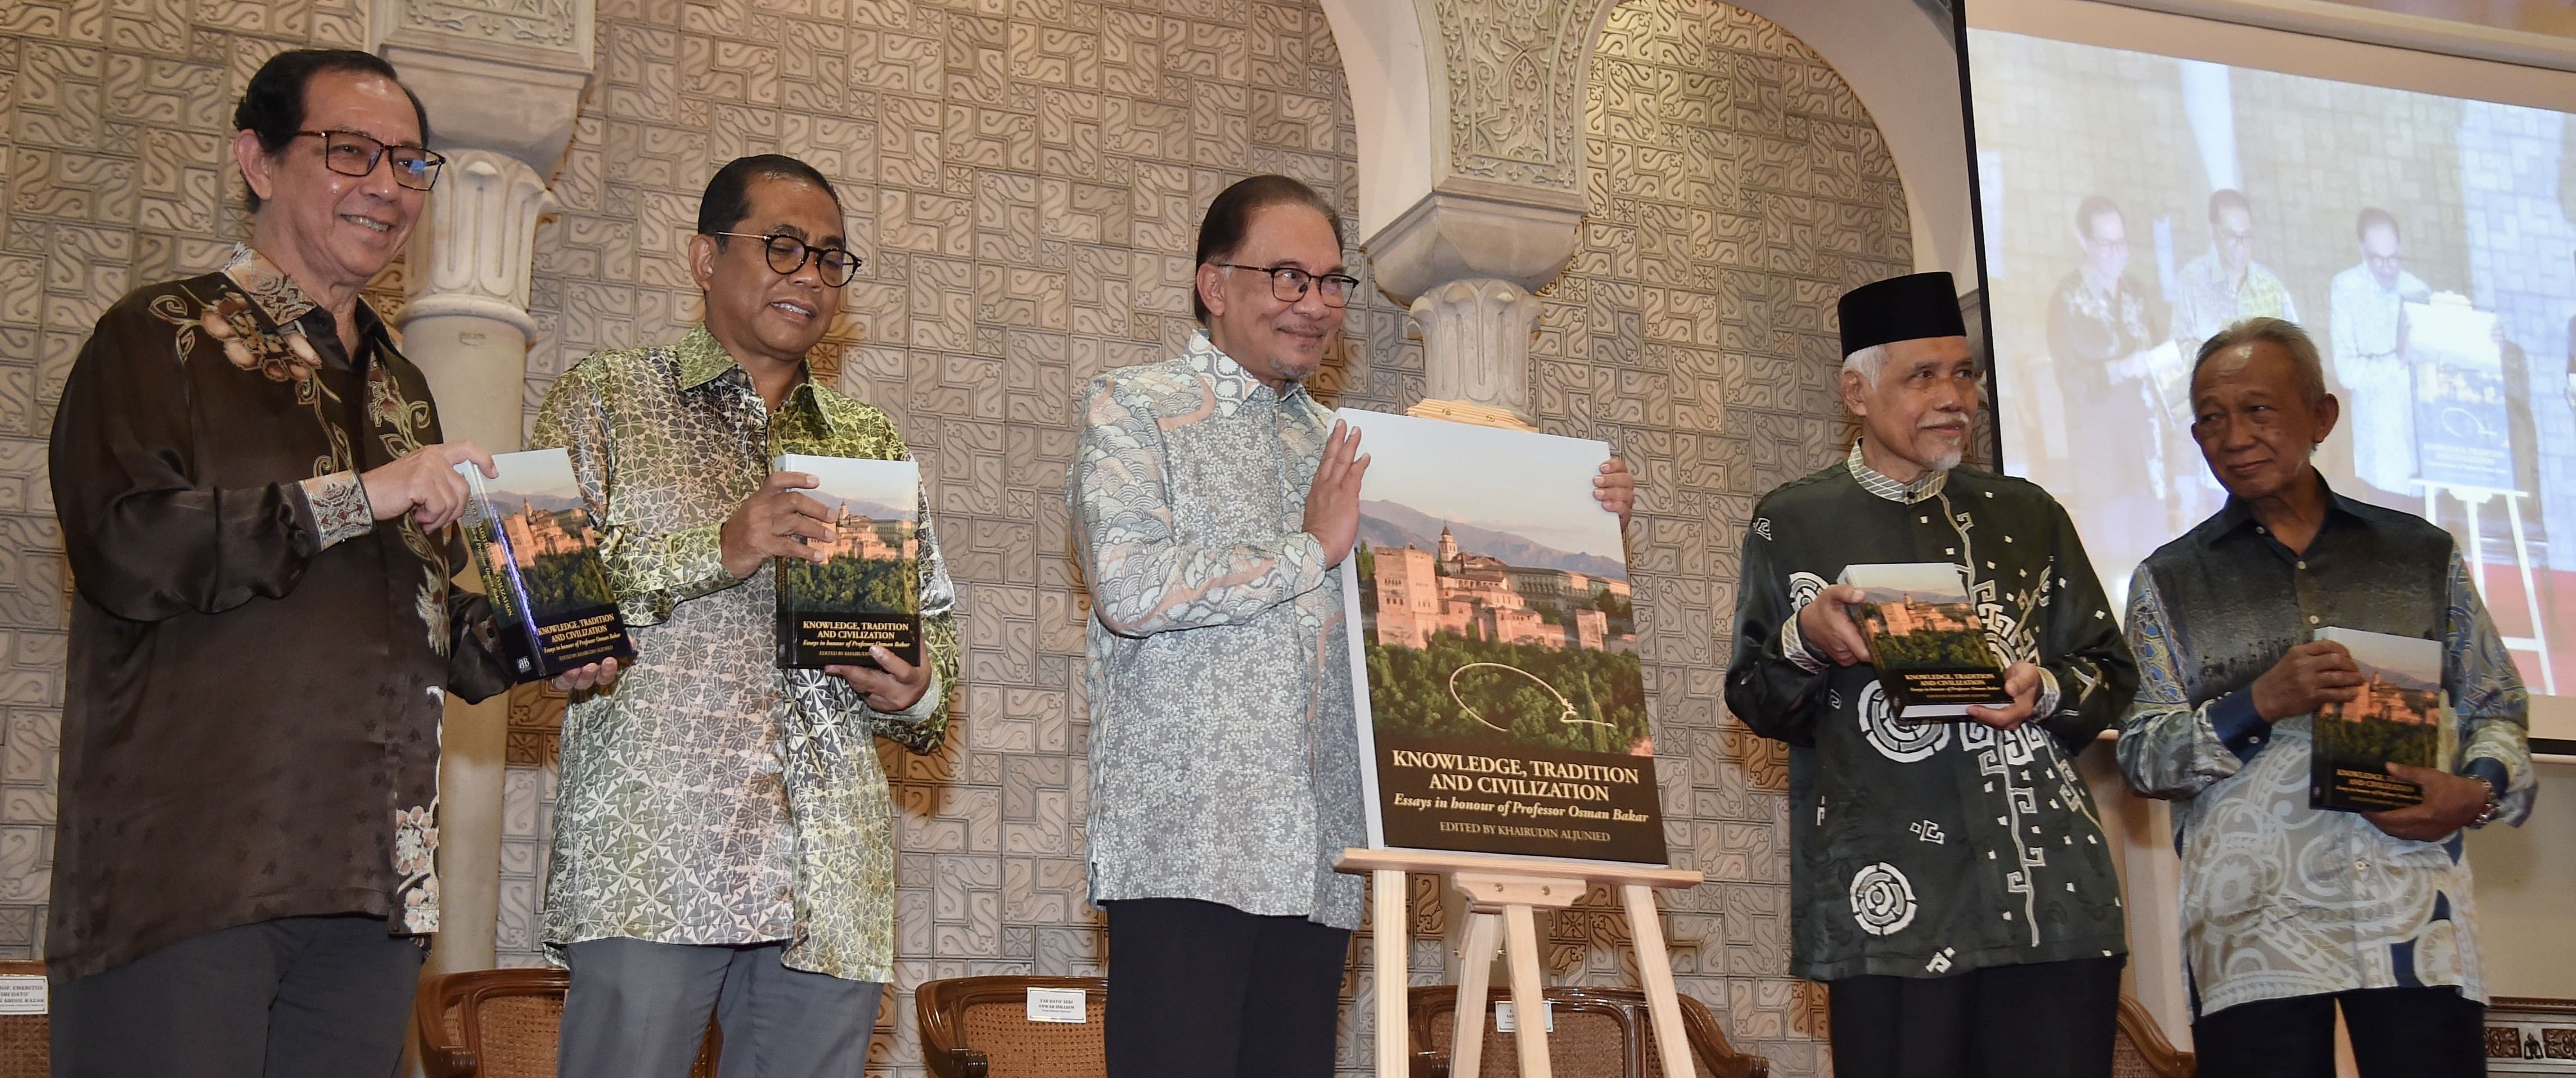 PM Lancar Buku "Knowledge, Tradition And Civilization: Essays In Honour Of Professor Osman Bakar"